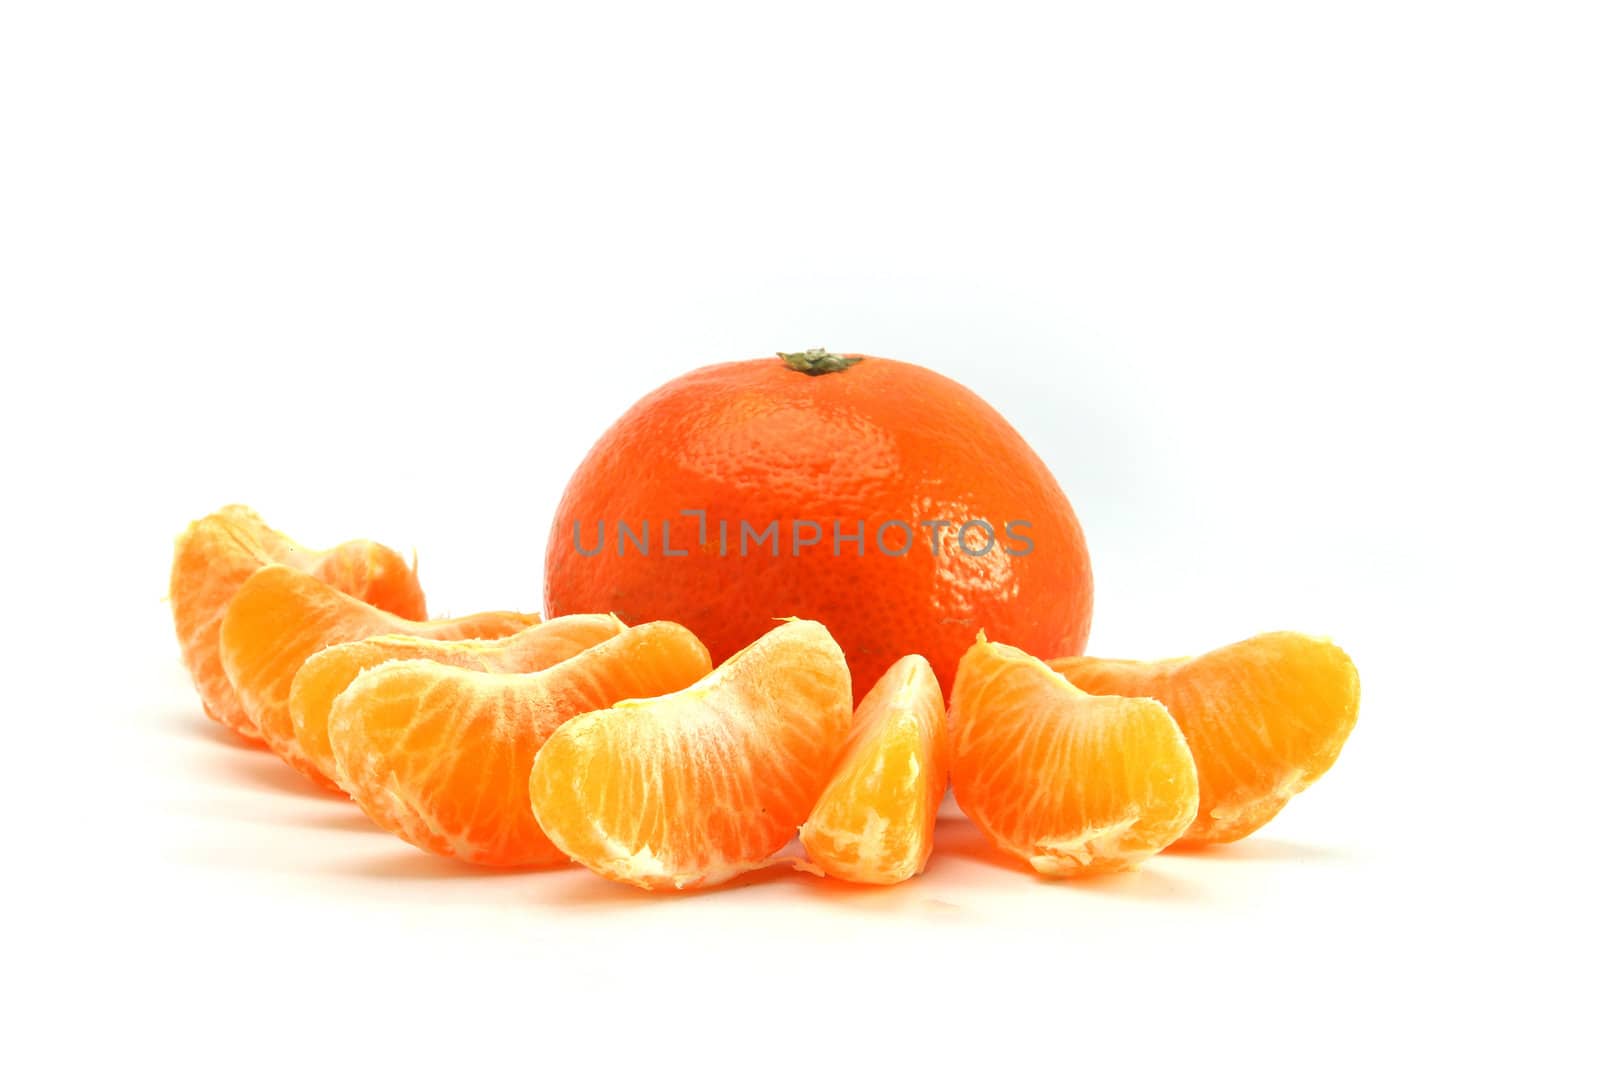 Orange segments by phovoir